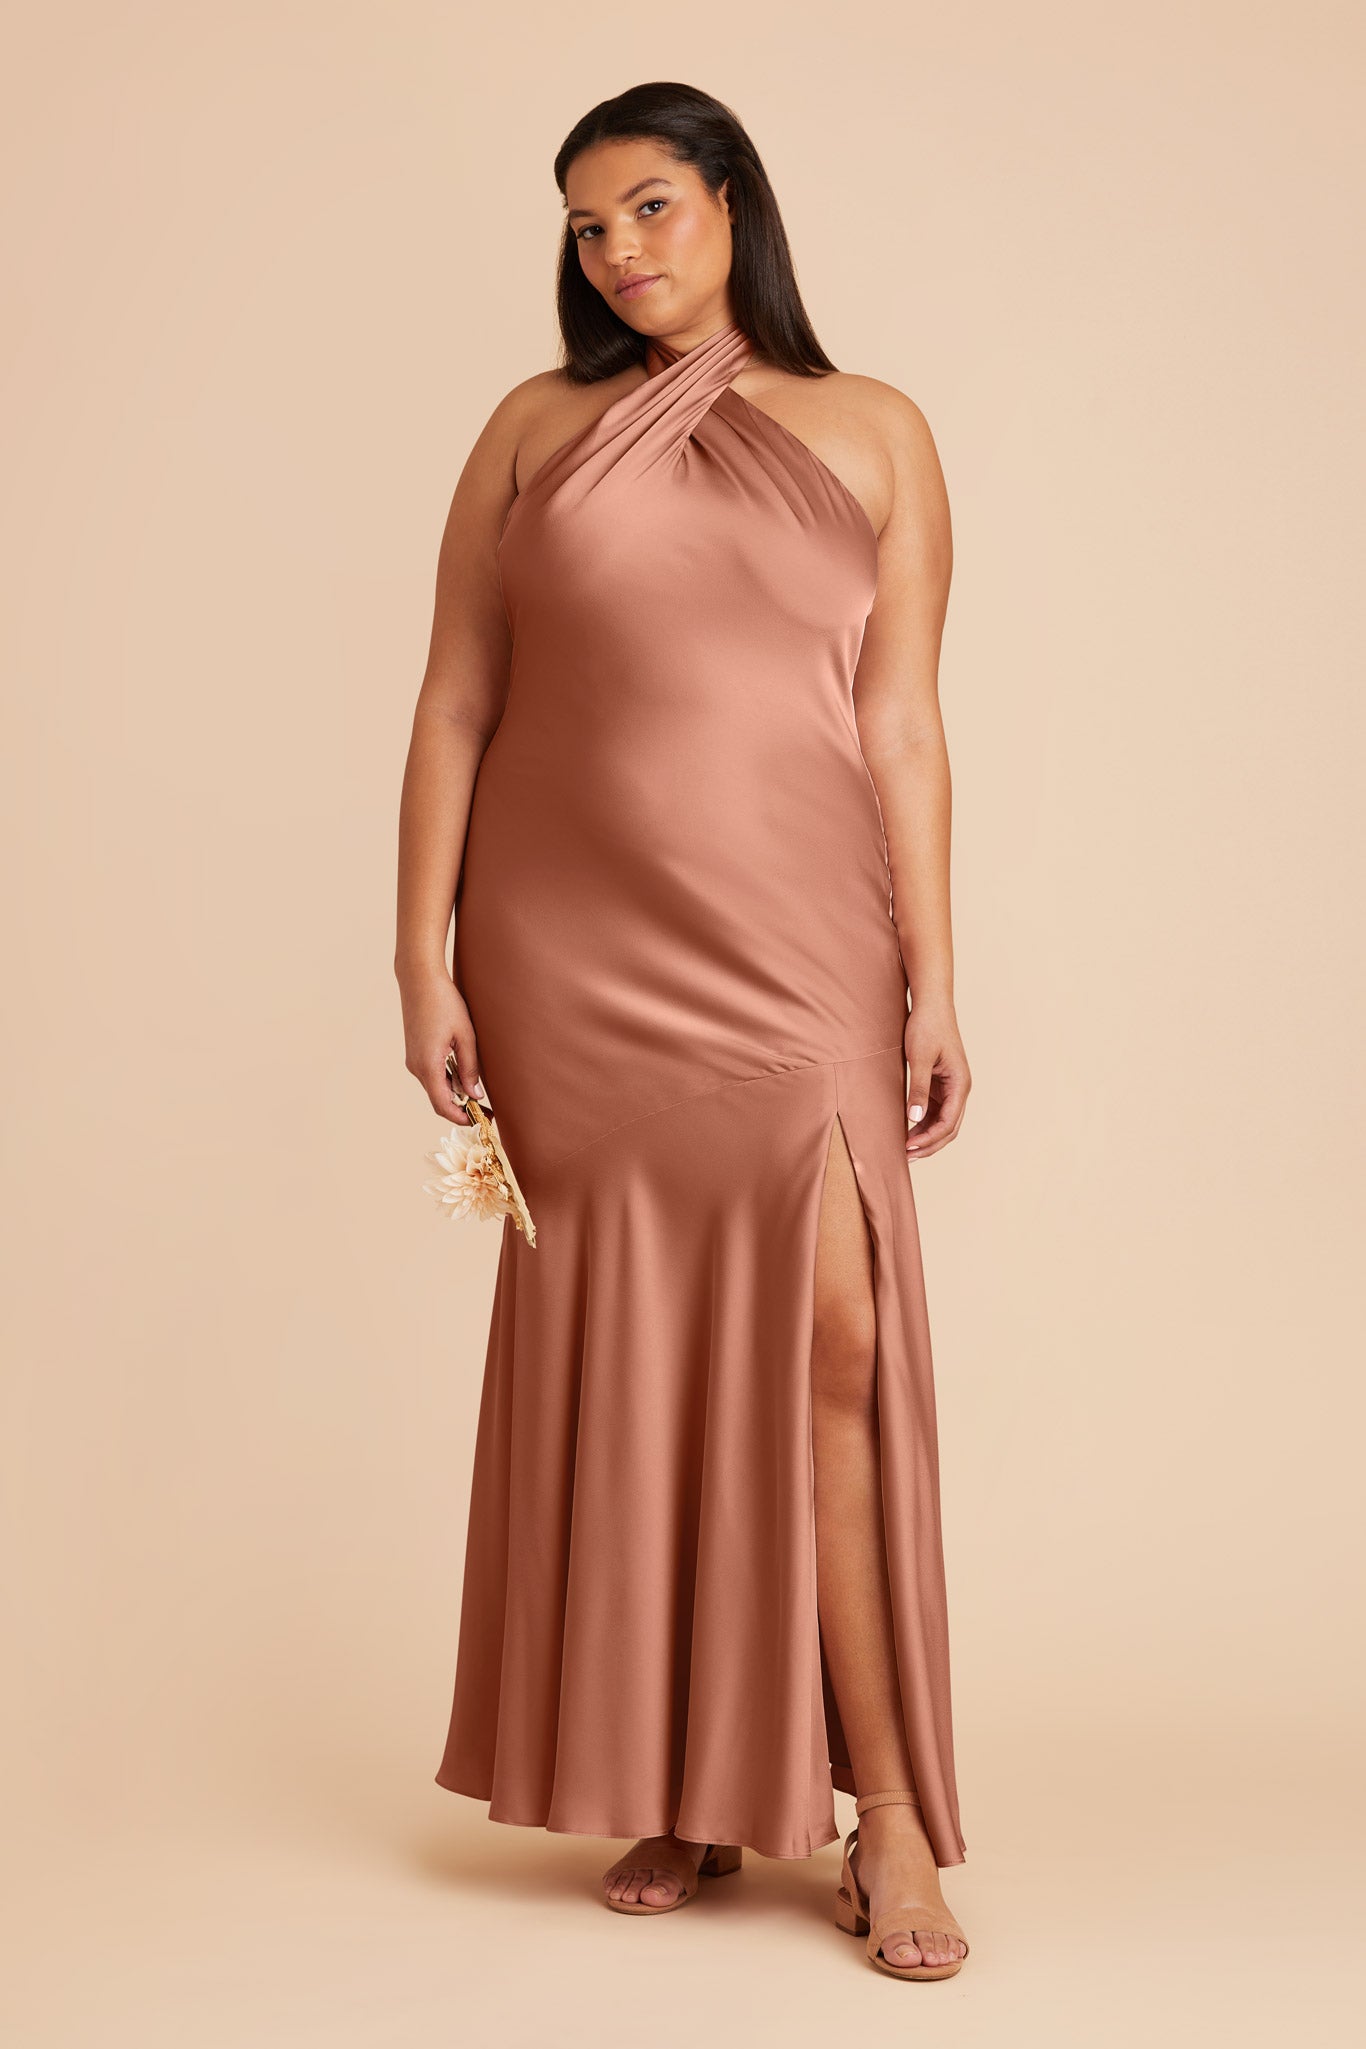 Desert Rose Stephanie Matte Satin Dress by Birdy Grey